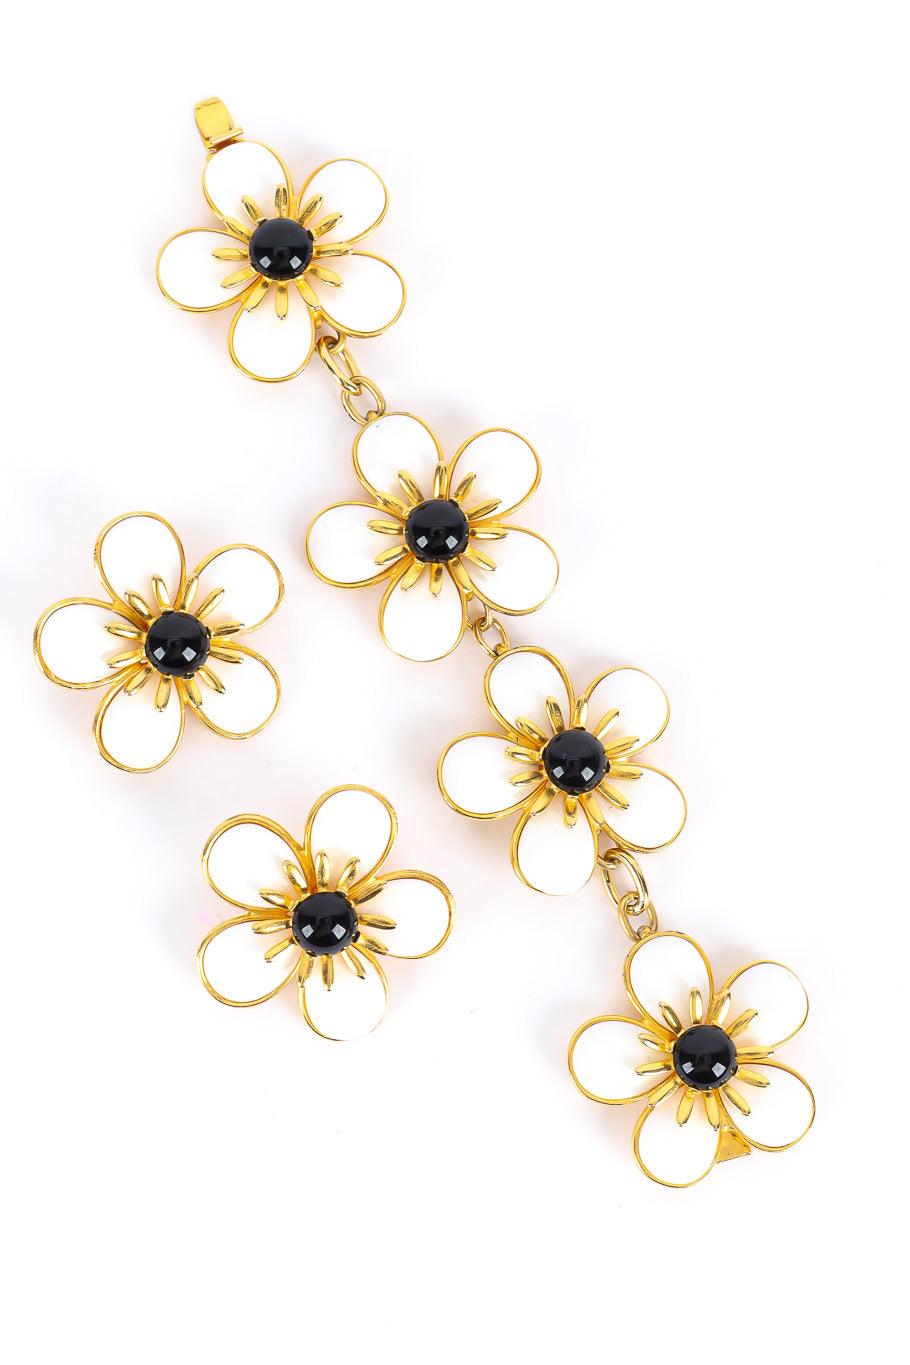 Flower bracelet and earring set by Ben Amun flat lay @recessla